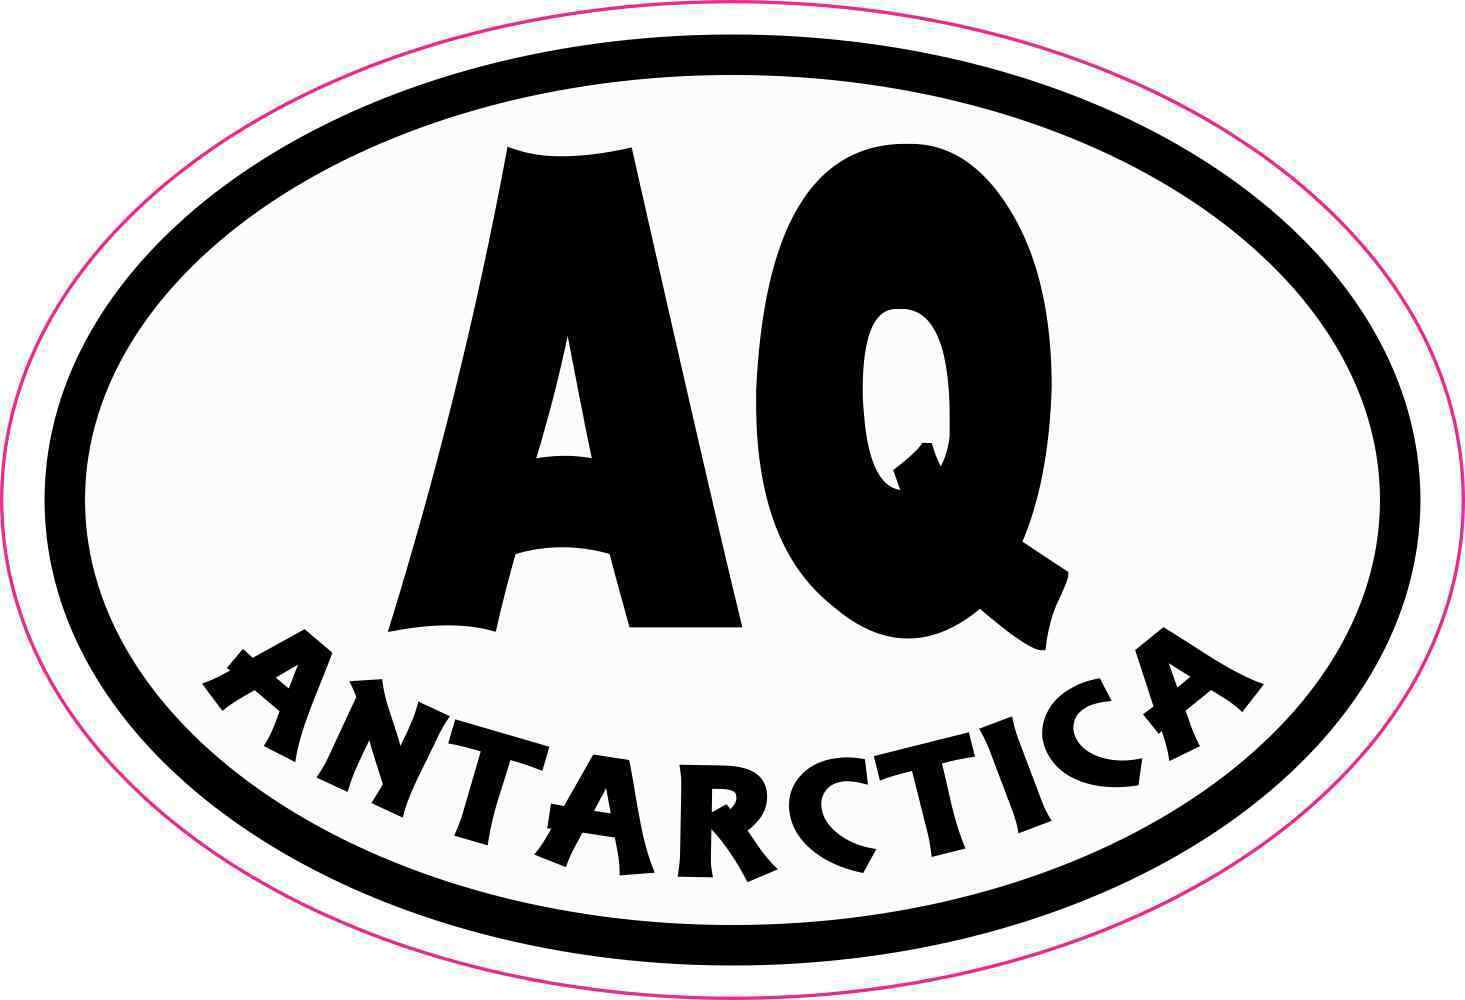 3X2 Oval AQ Antarctica Sticker Vinyl Cup Decals Stickers Bumper Vehicle Decal